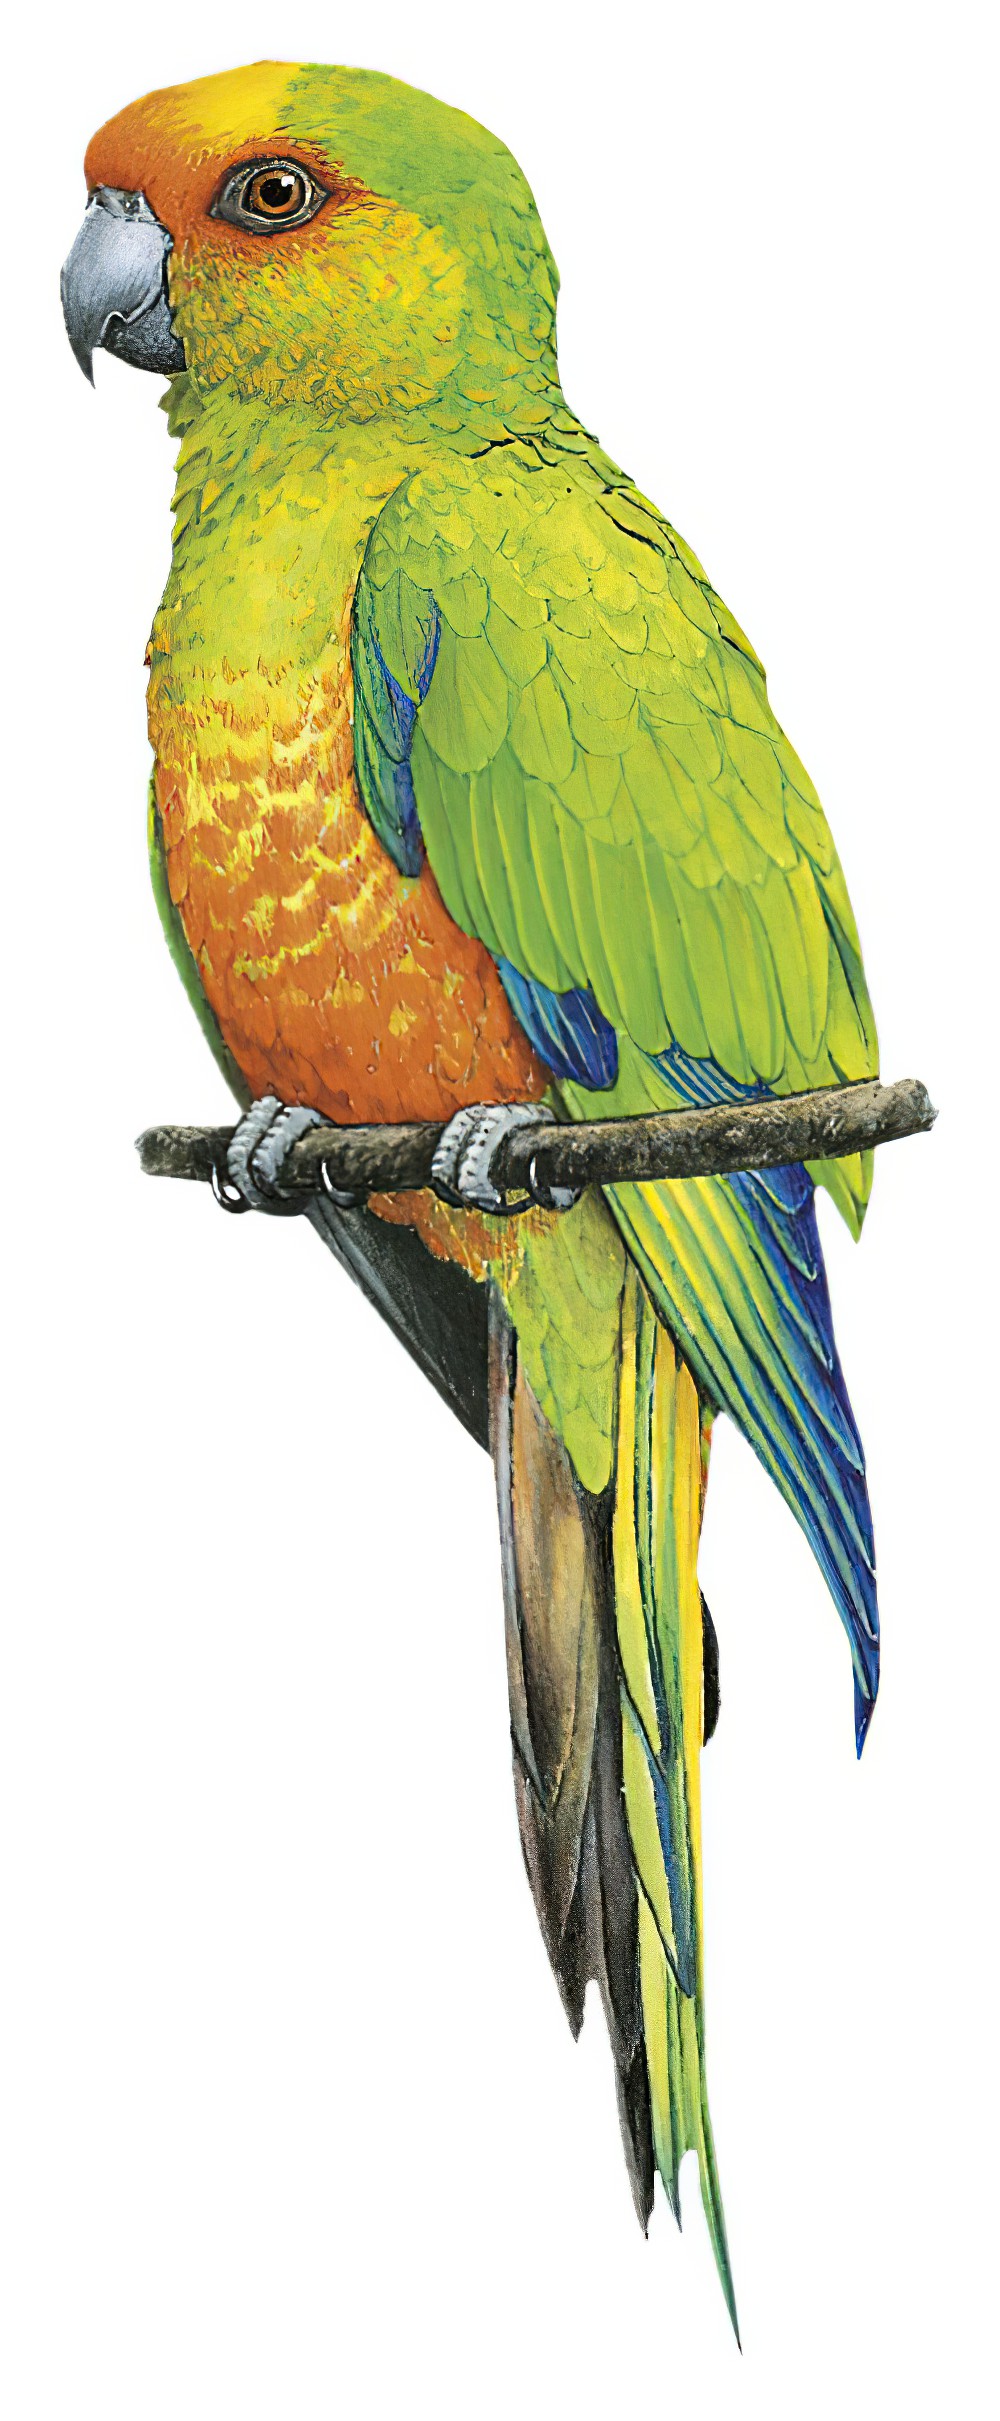 Golden-capped Parakeet / Aratinga auricapillus